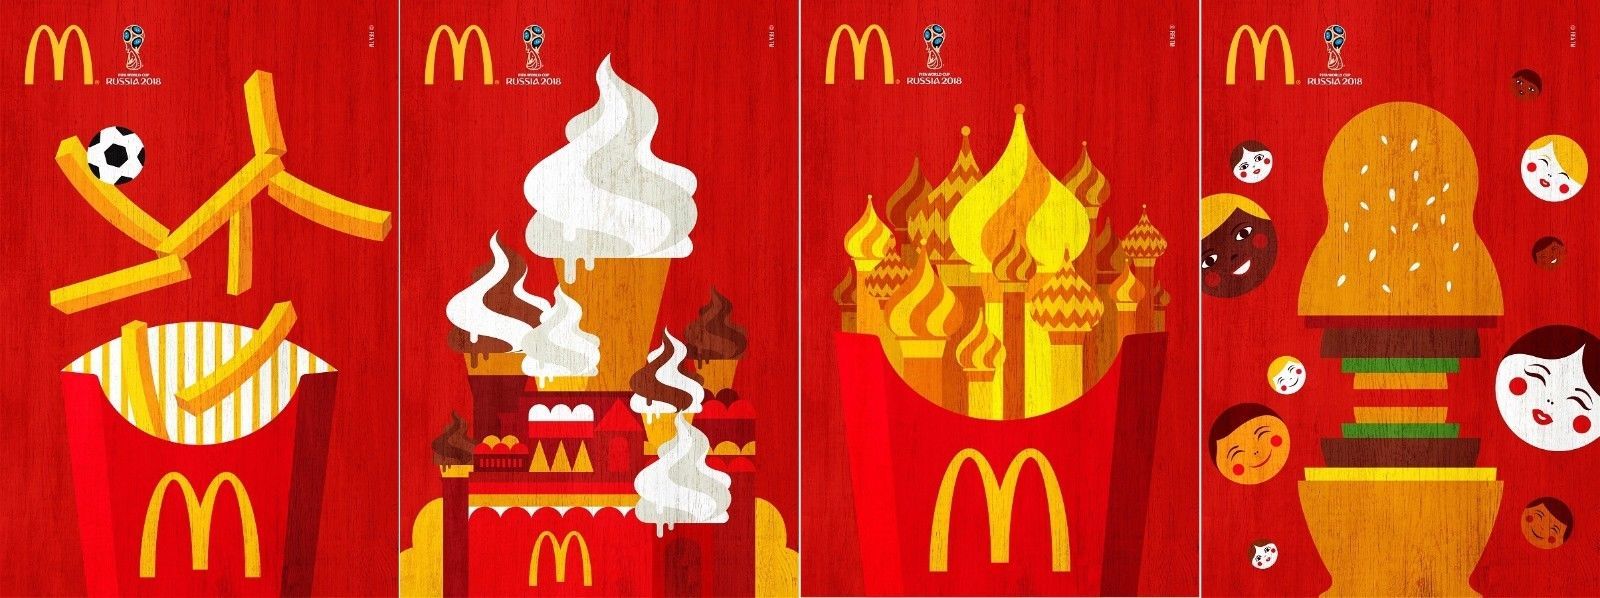 FIFA World Cup McDonald's AD Poster 2018 Soccer Tournament Print 24x36" 27x40" - £9.54 GBP - £19.96 GBP